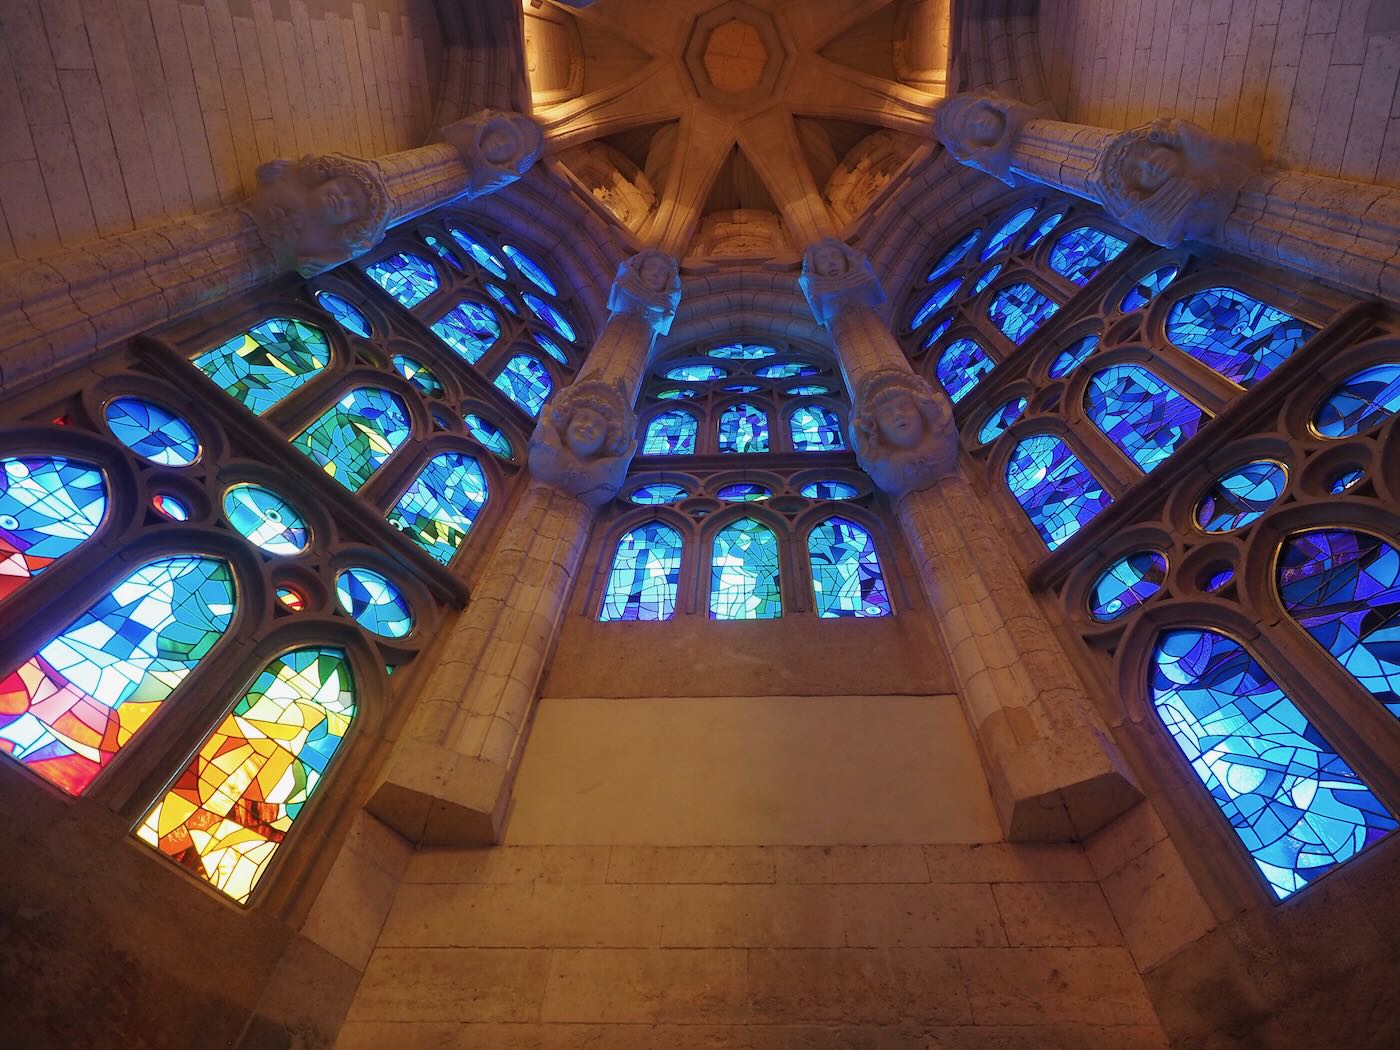 巴賽隆納景點 聖家堂 La Sagrada Familia - 一口冒險 Bitesized Adventure